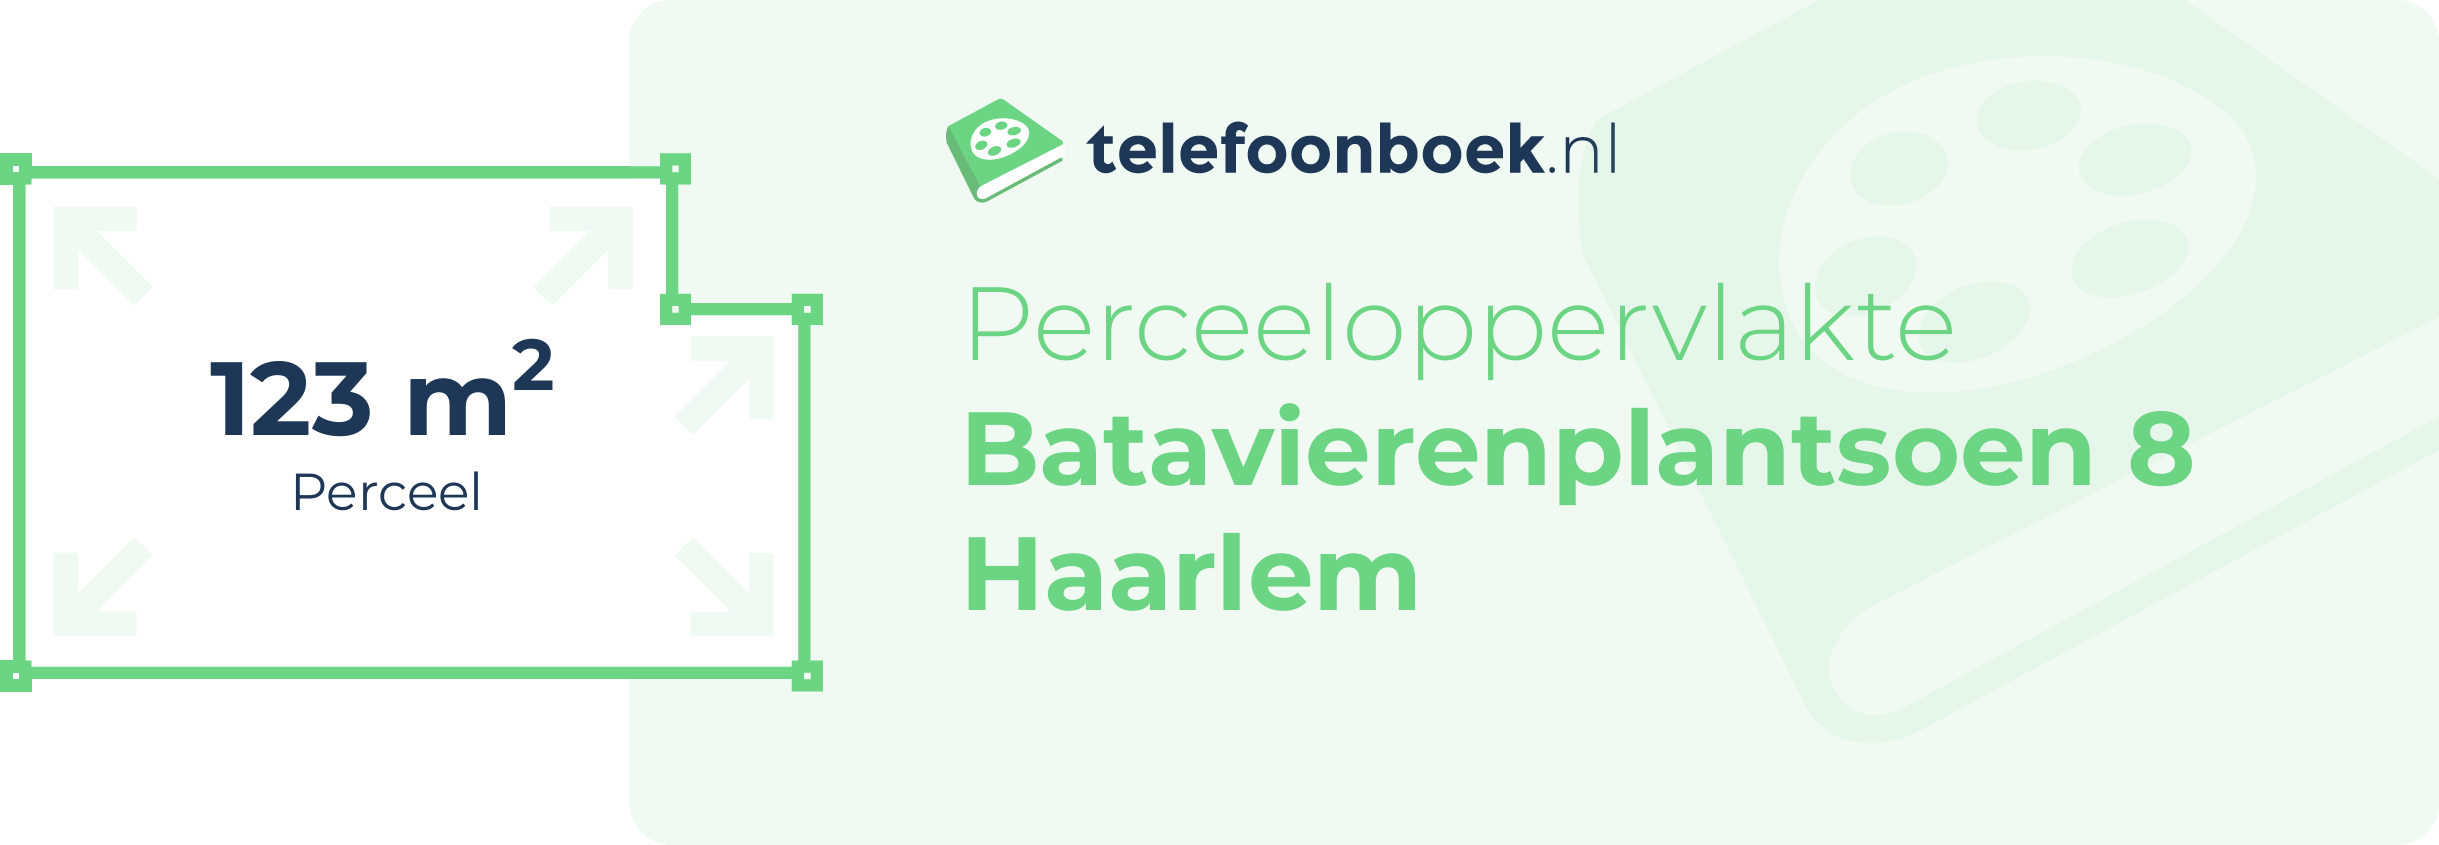 Perceeloppervlakte Batavierenplantsoen 8 Haarlem